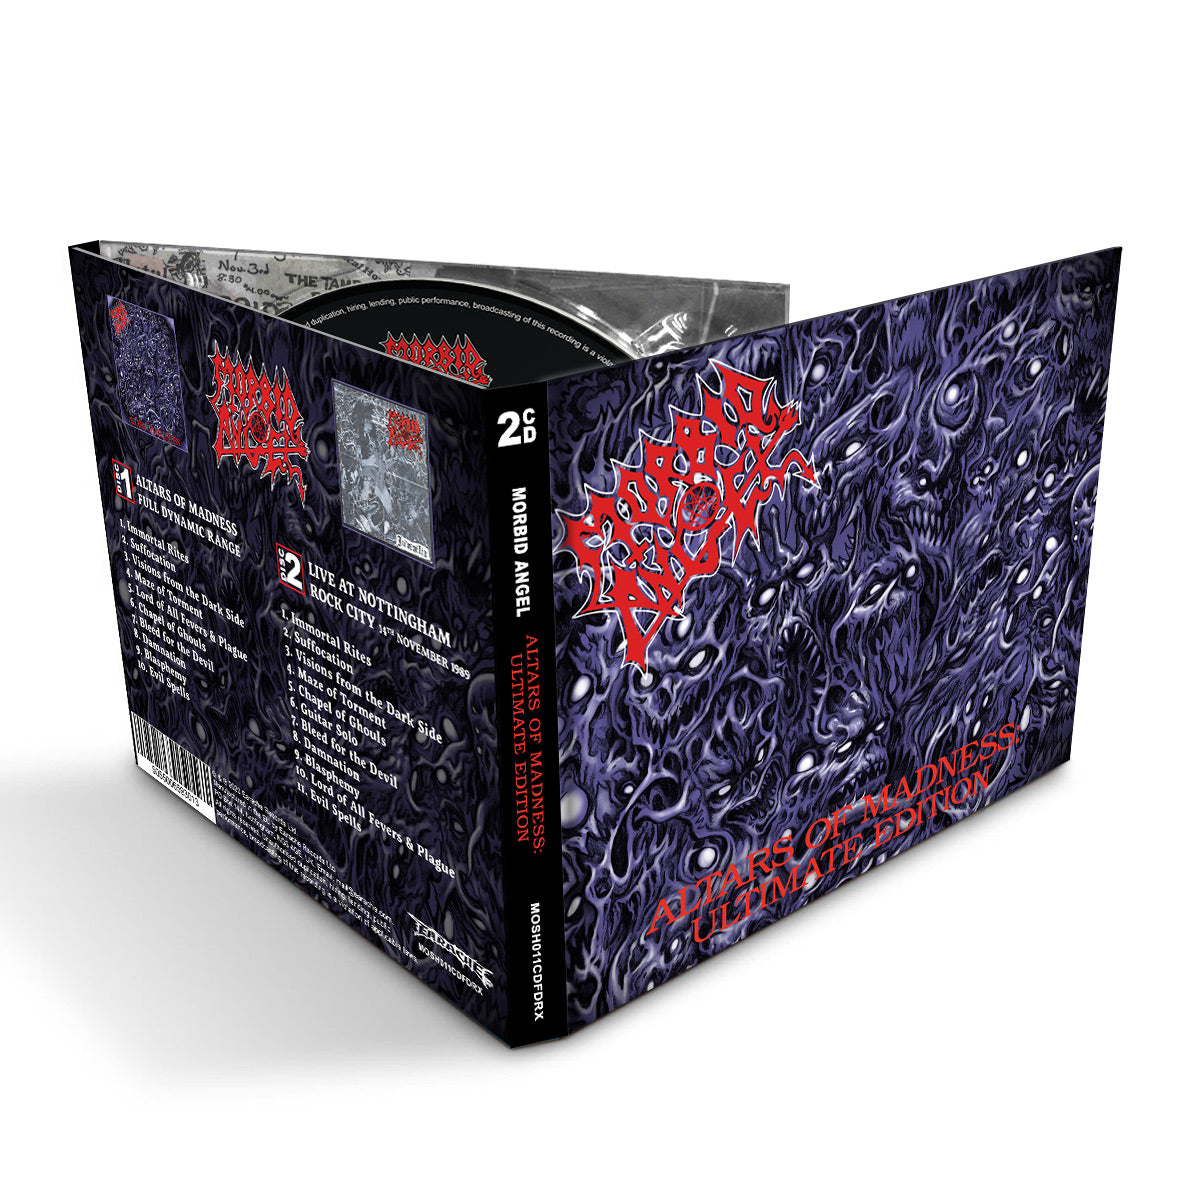 Morbid Angel "Altars Of Madness: Ultimate Edition" 2CD Digipak